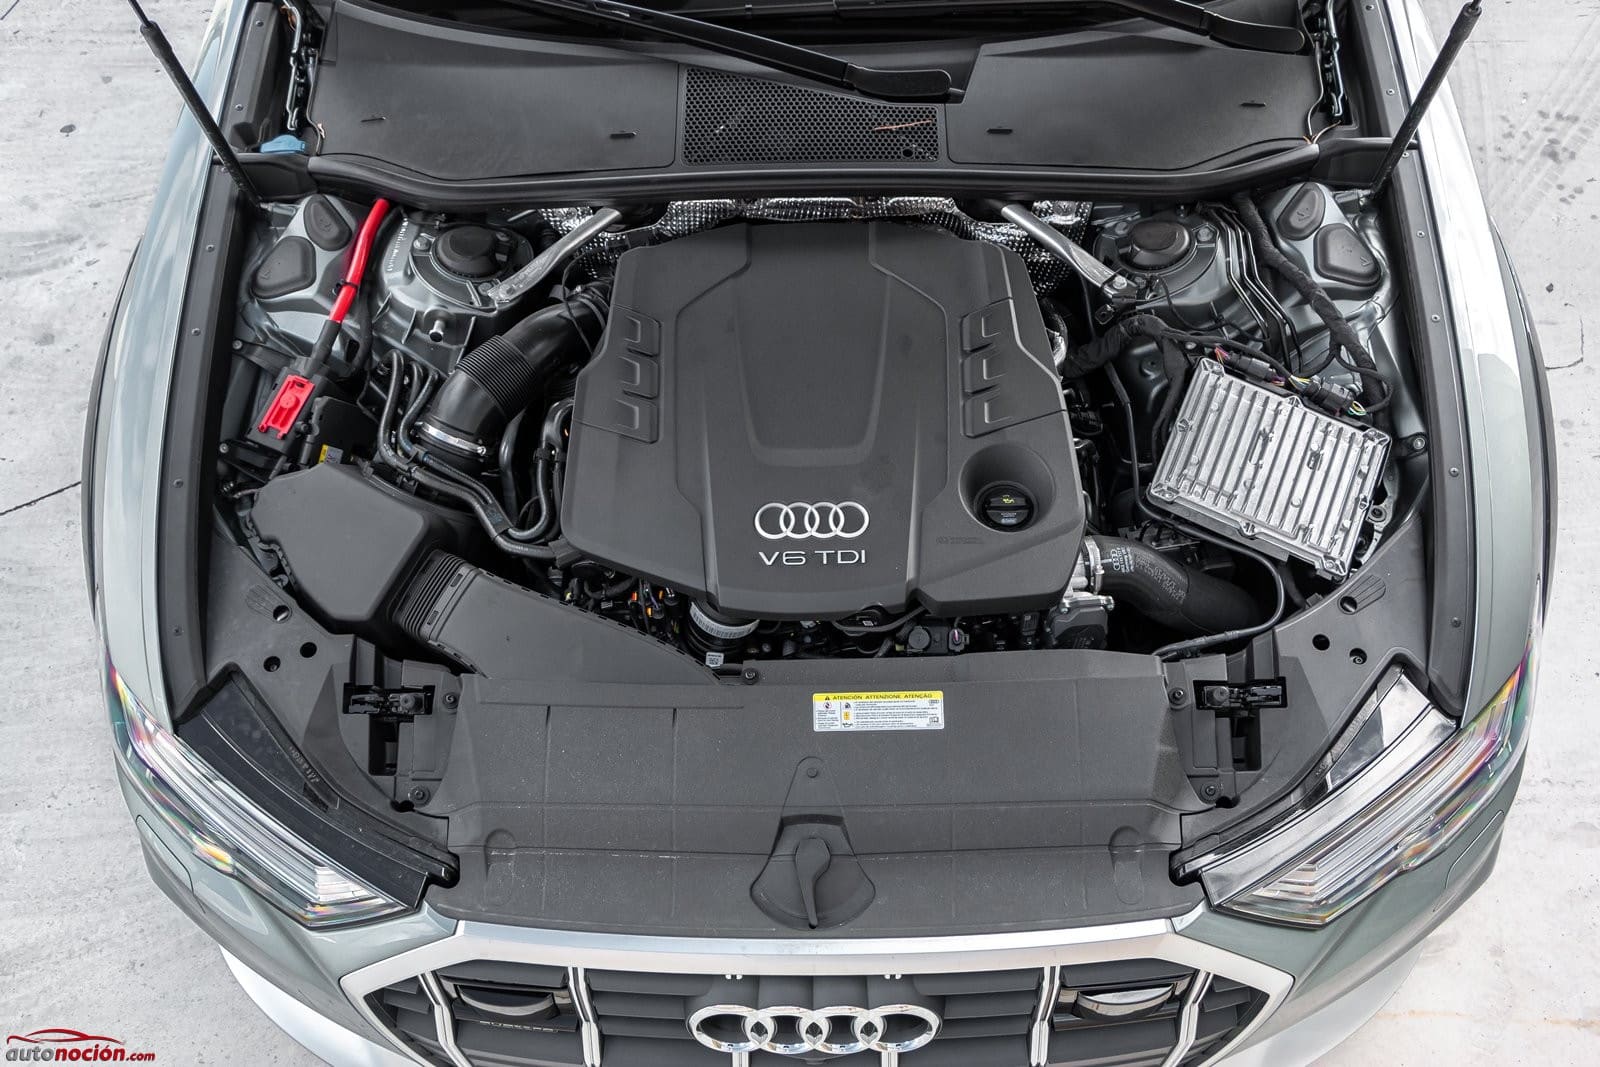 https://www.autonocion.com/wp-content/uploads/2020/04/Prueba-Audi-A6-allroad-quattro-45-TDI-tiptronic-2020-88.jpg